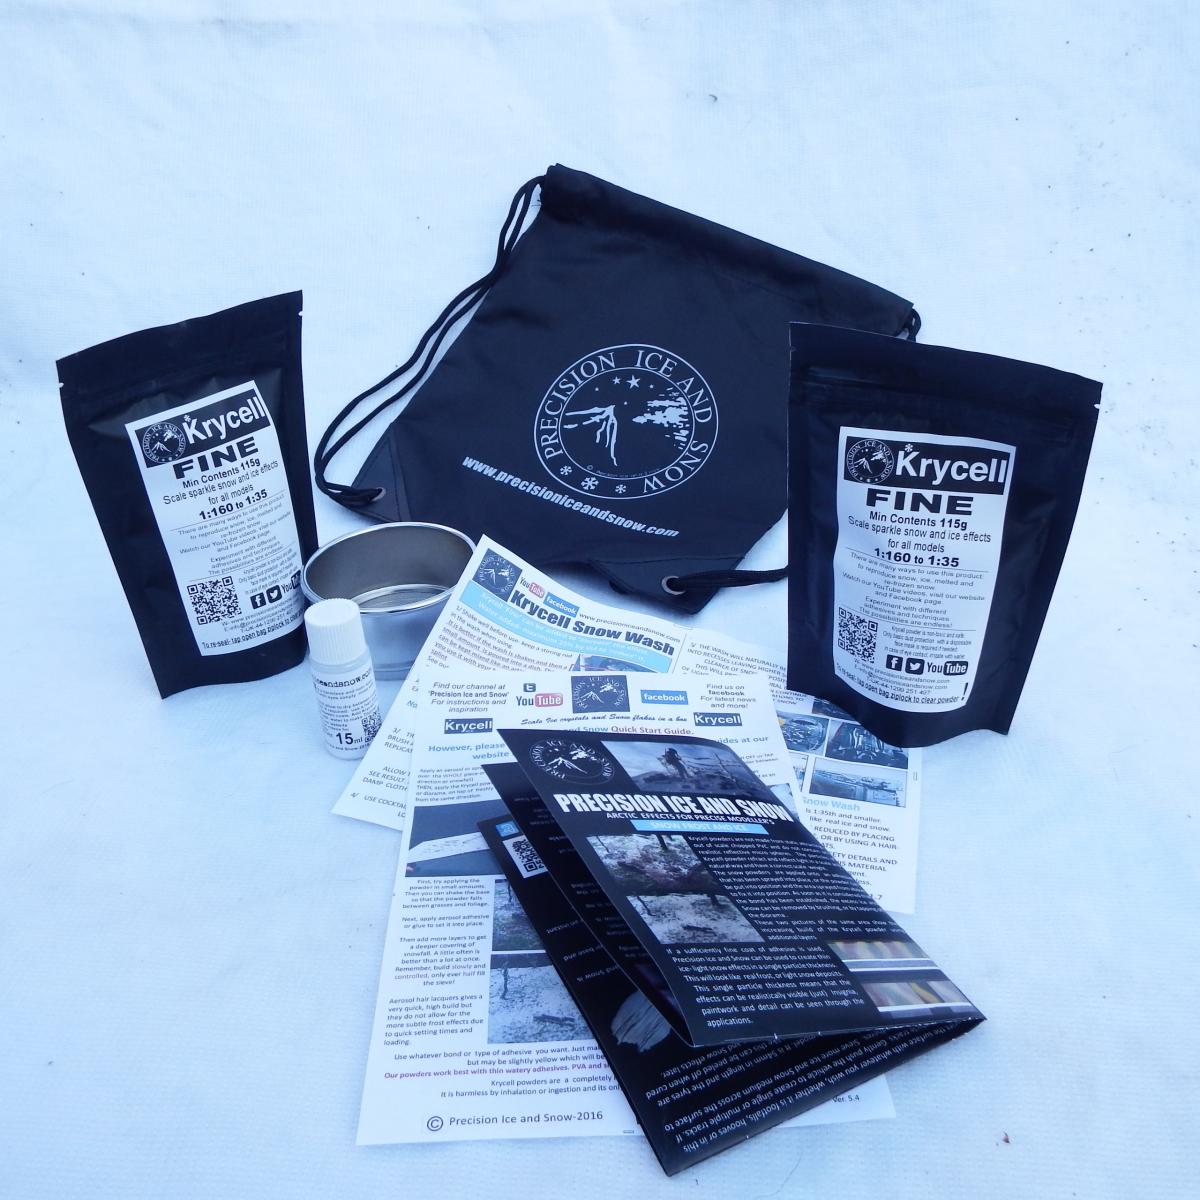 Precision Ice & Snow Ice & Snow kit - fine and extra